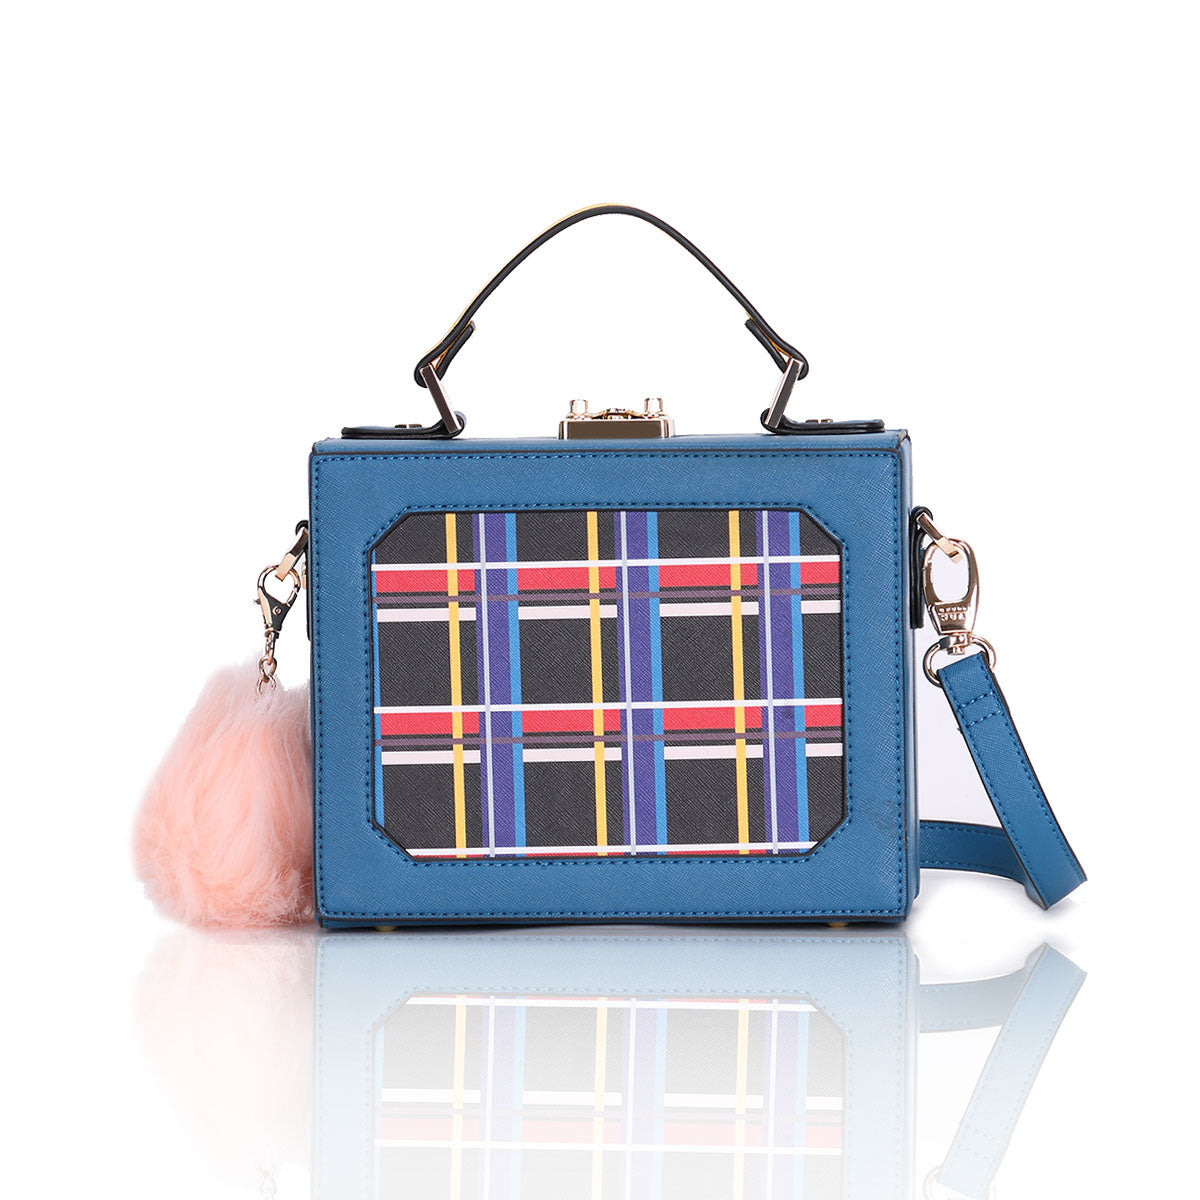 LYDC Multicolour Geometric Fancy Handbag